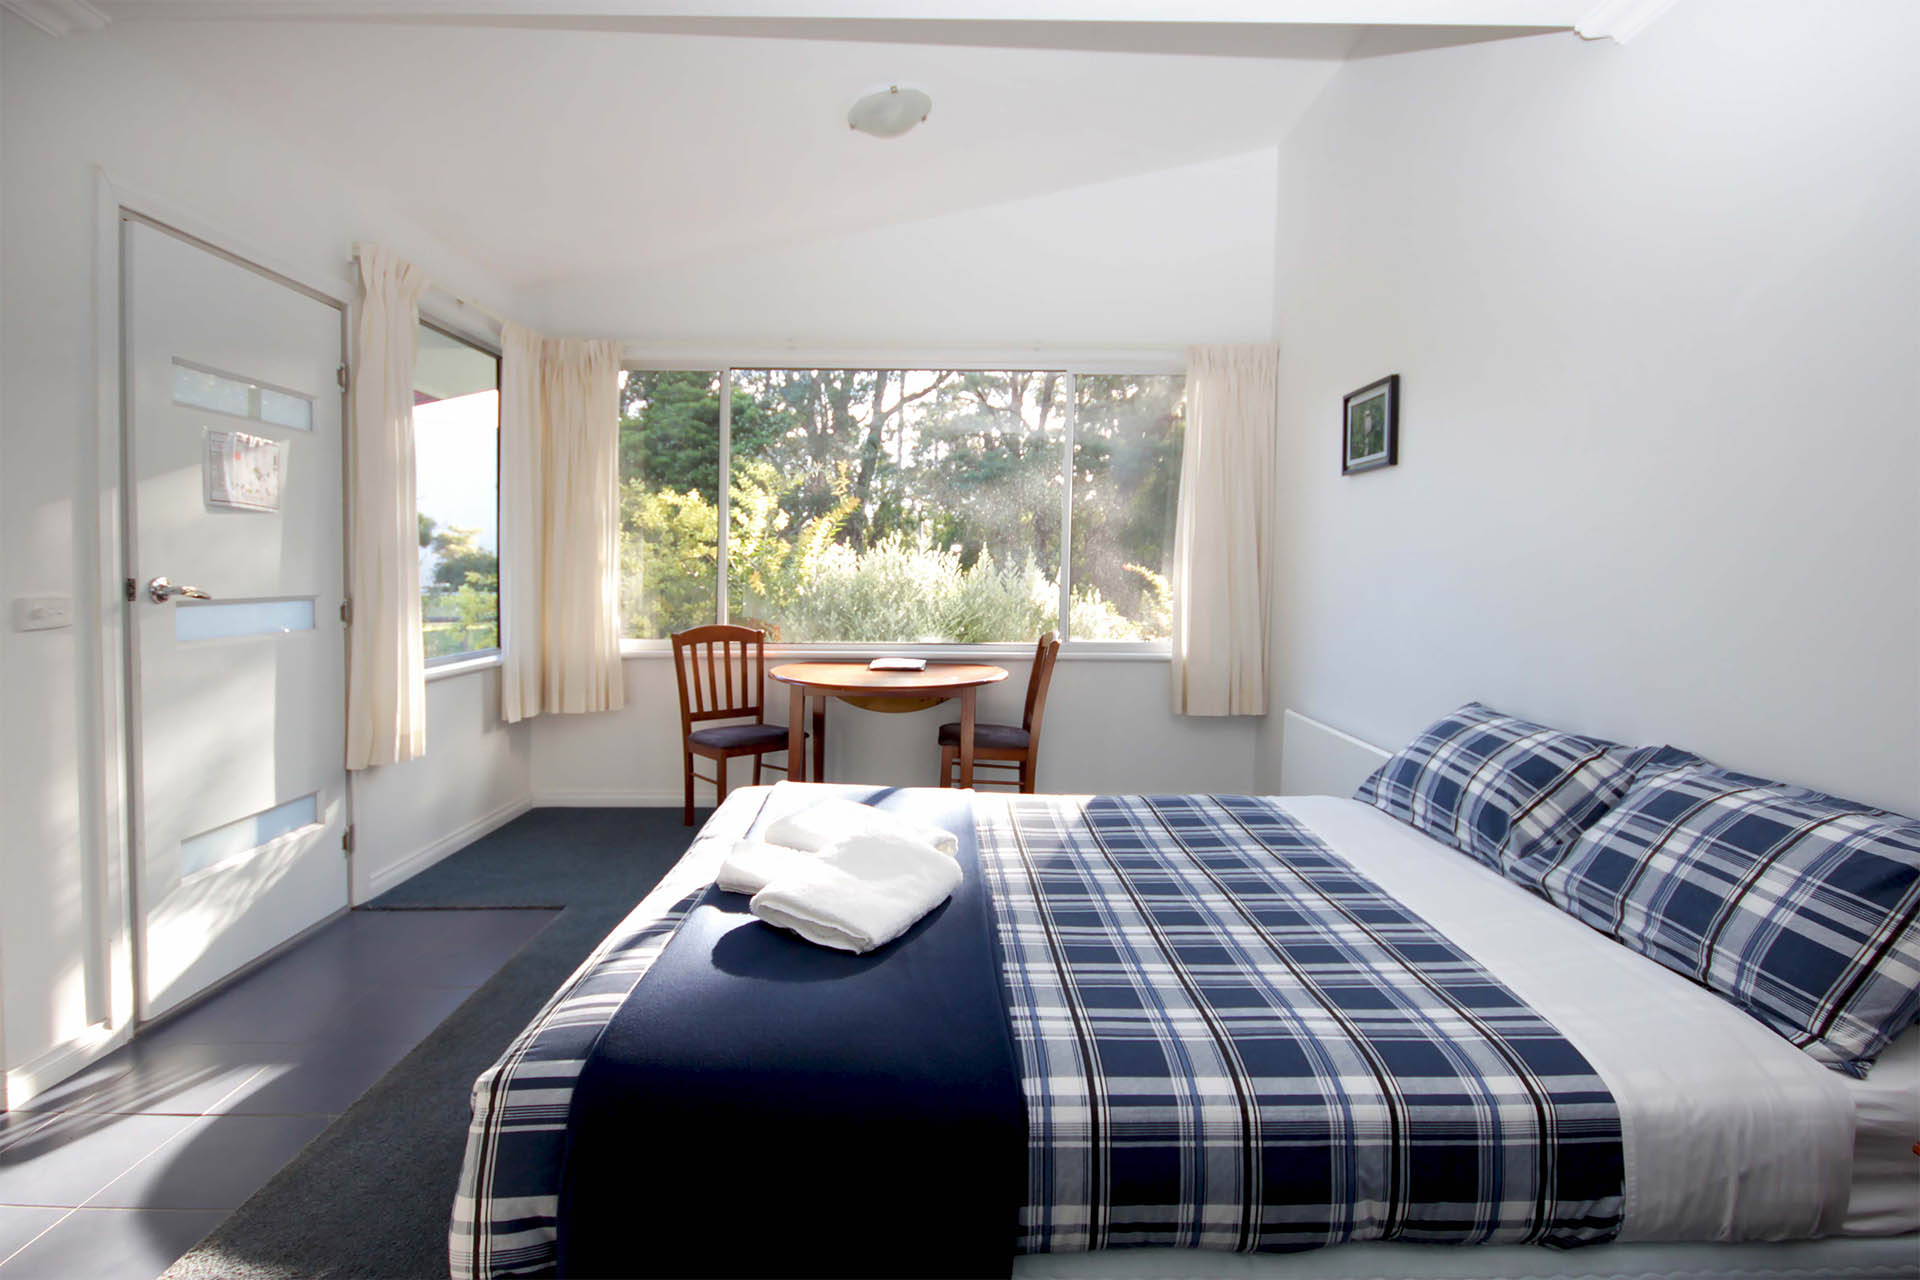 An image of the accommodation units at The Abbey, Raymond Island Australia